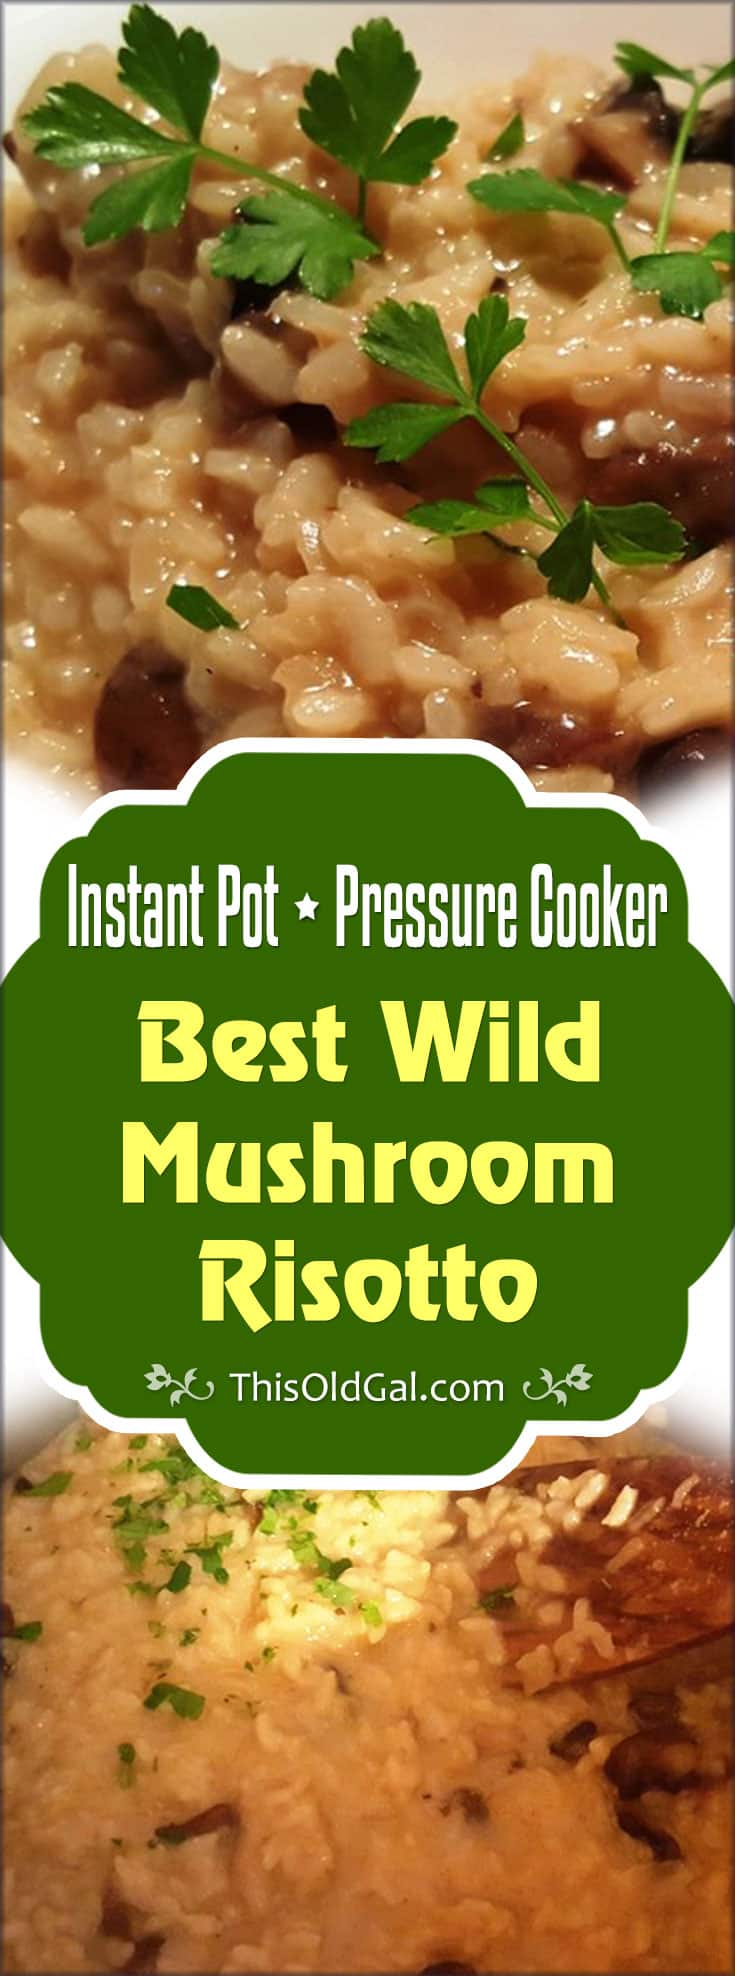 Pressure Cooker Best Wild Mushroom Risotto